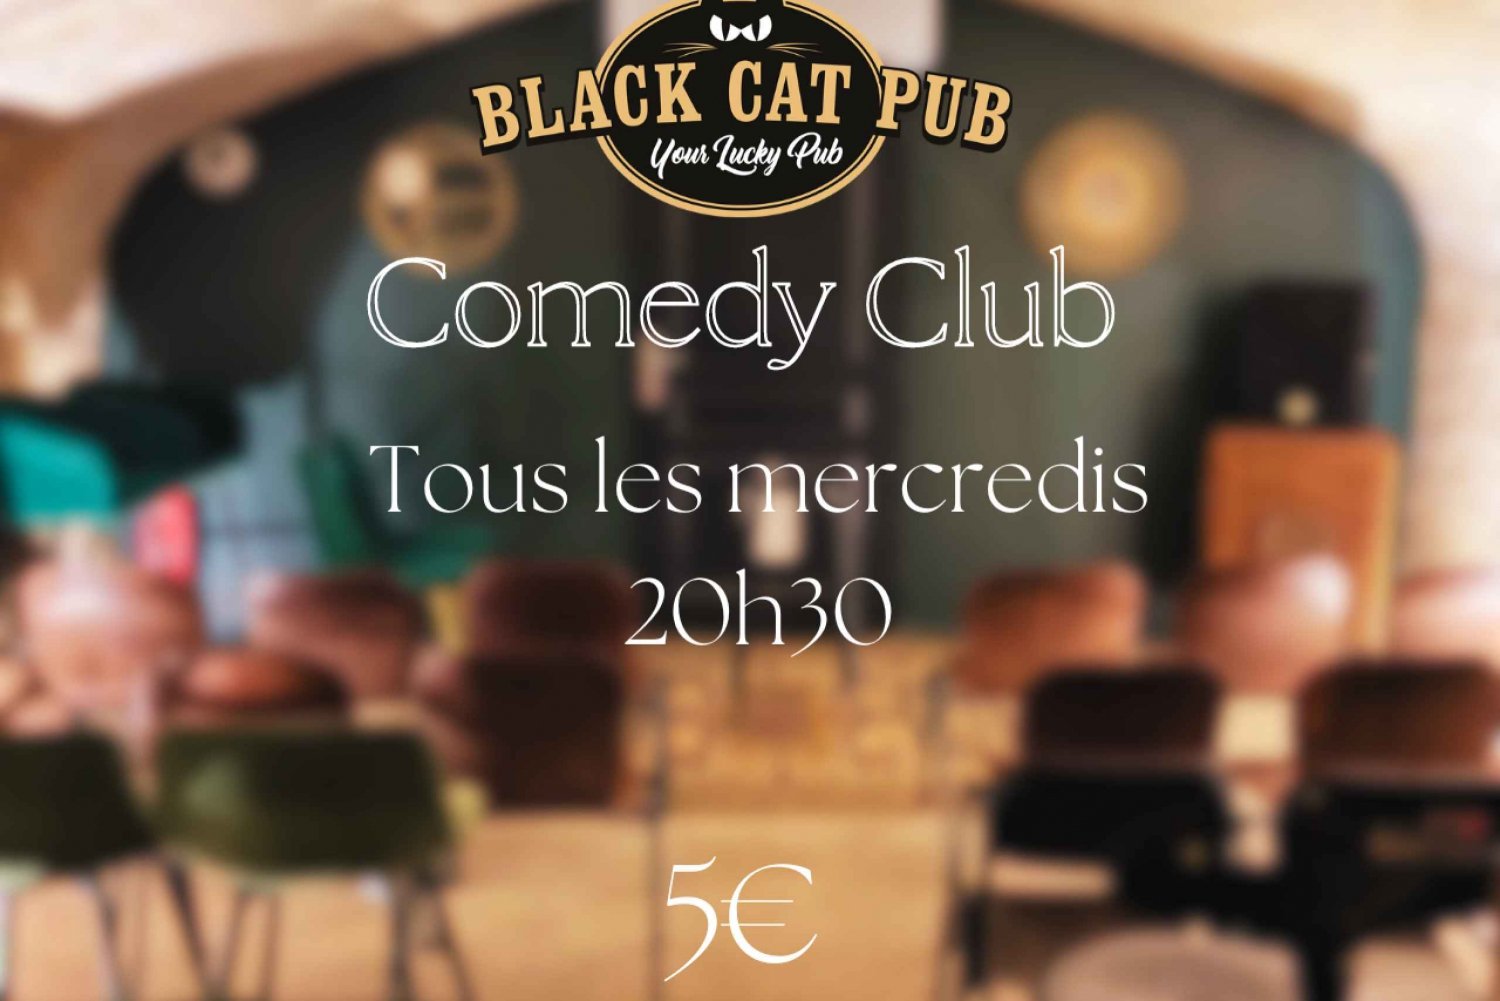 Clube de comédia The Black Cat